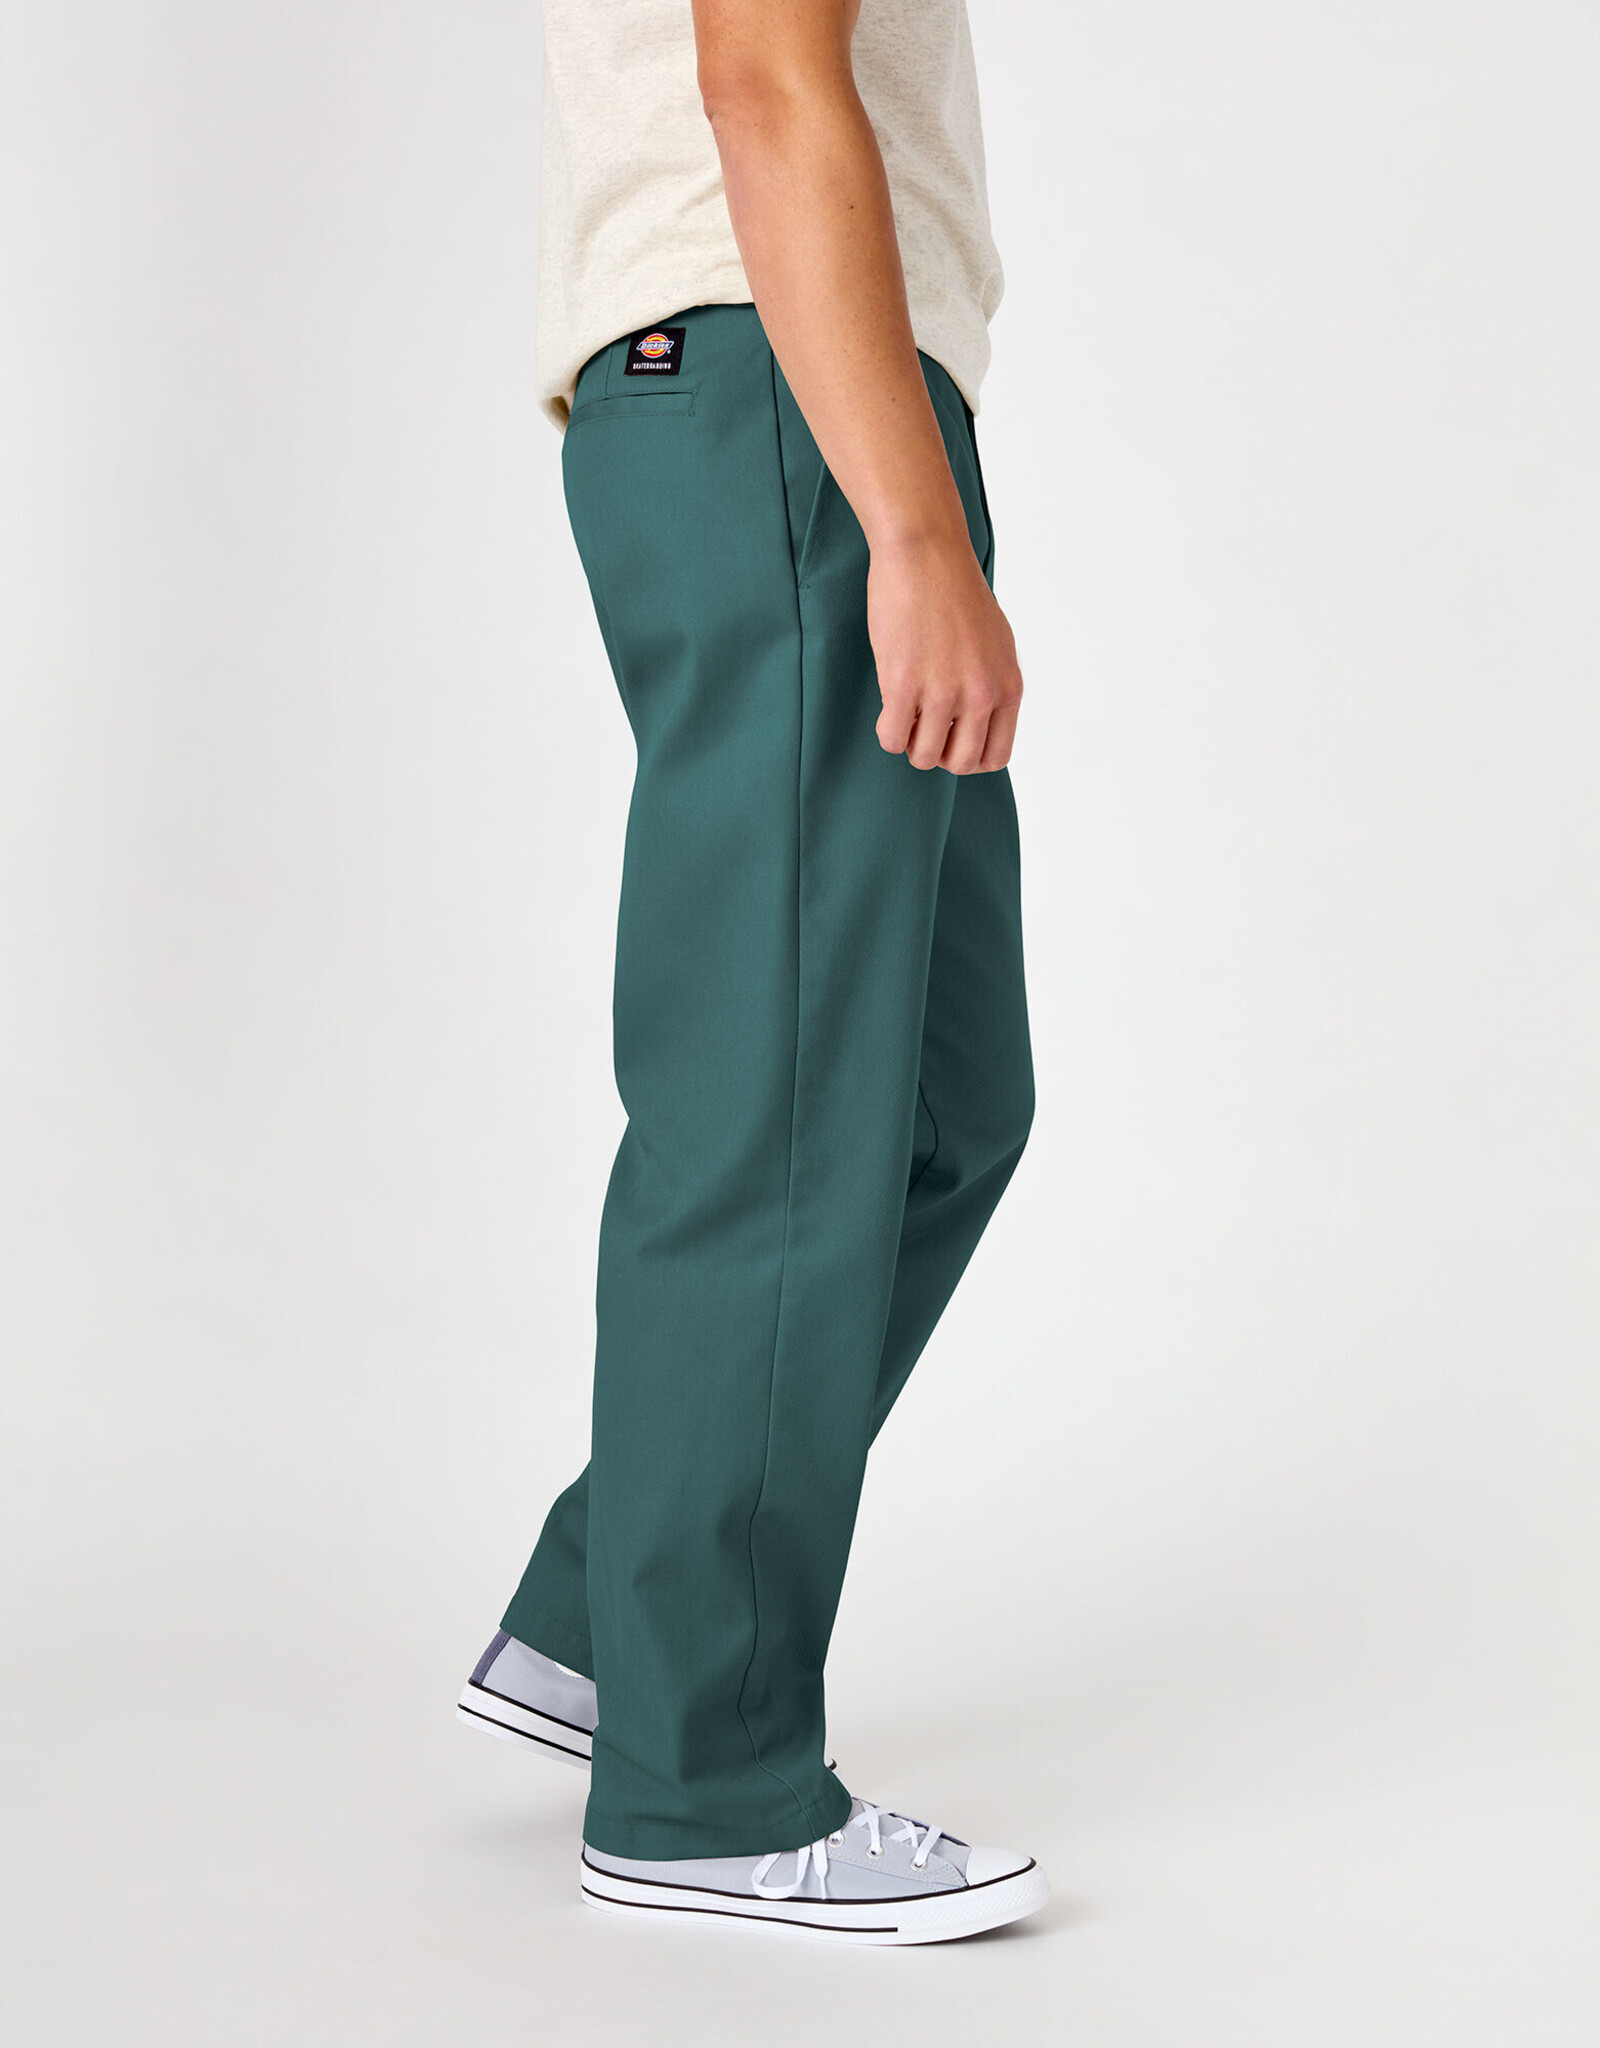 Dickies Green Pants for Men for sale  eBay